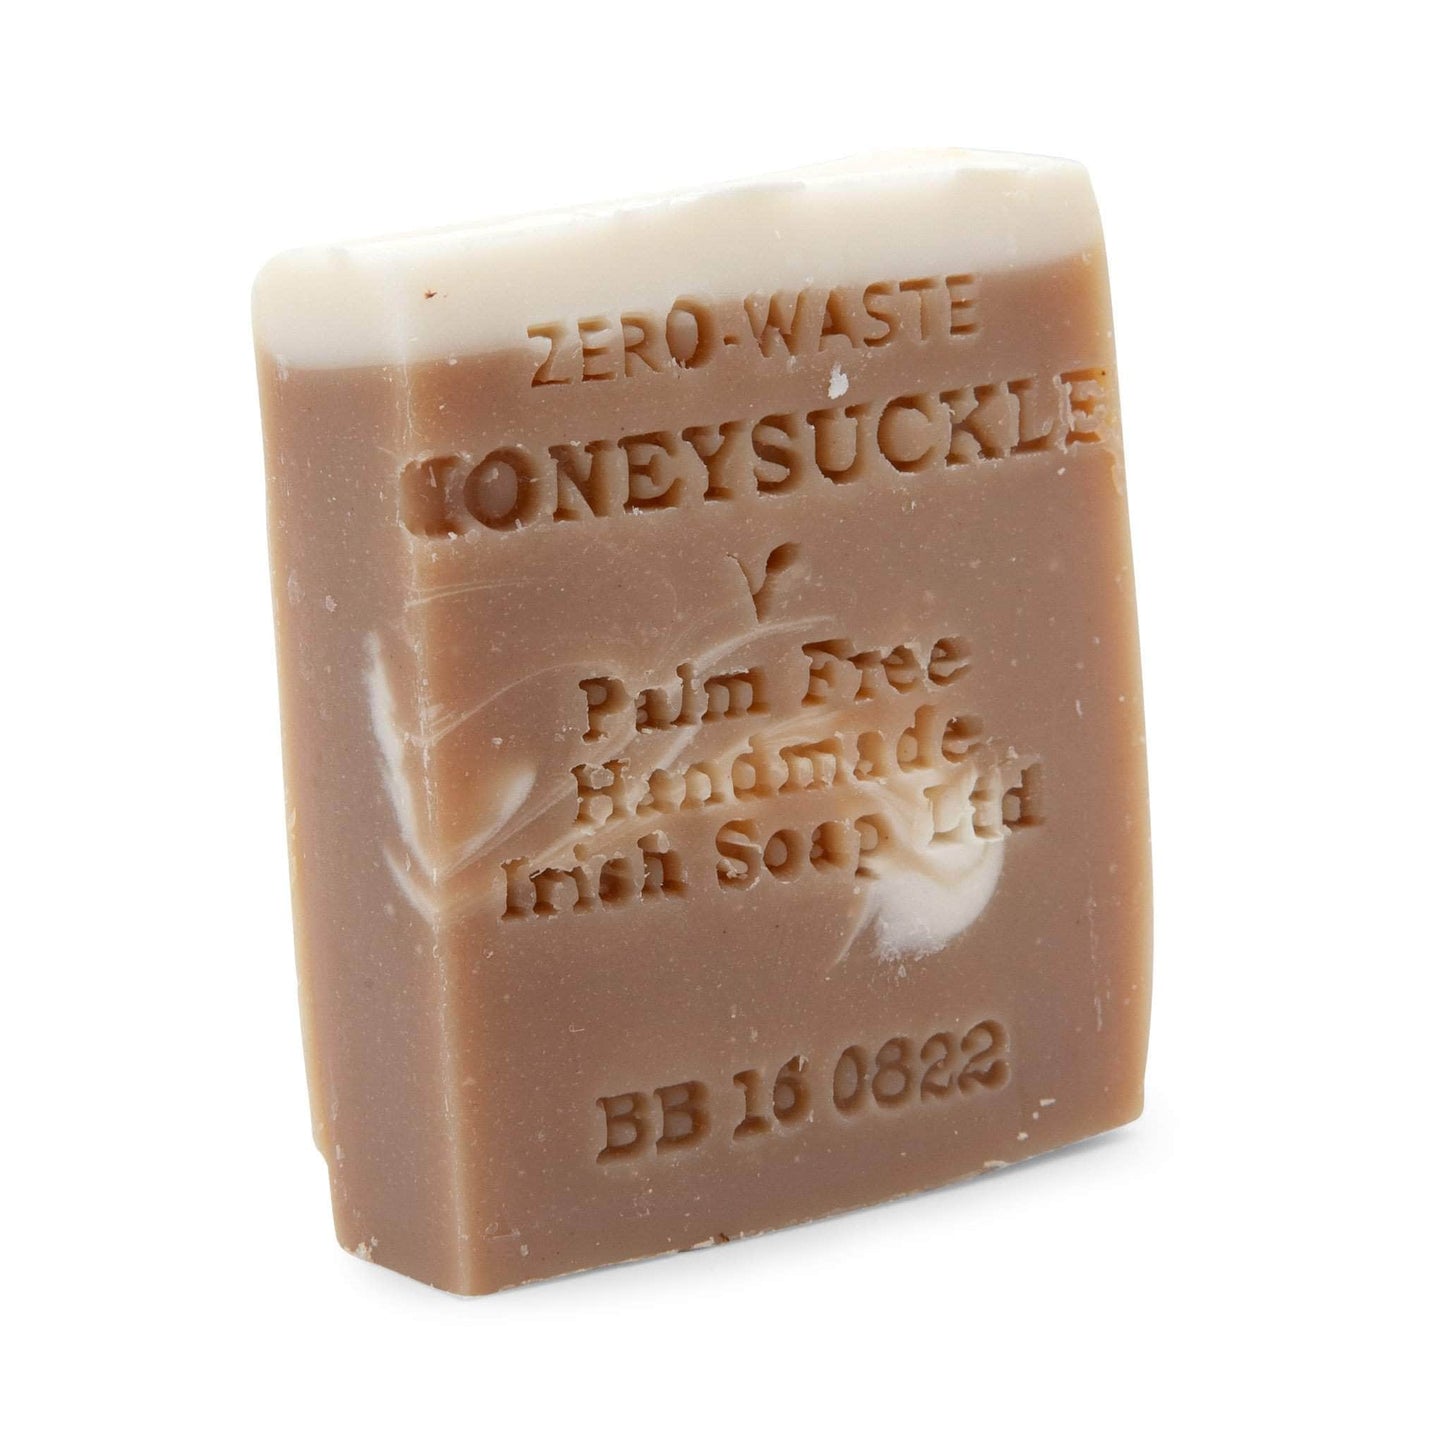 Palm Free Irish Soap Soap Palm Free Zero Waste Handmade Soap Bars - Honeysuckle Nectar